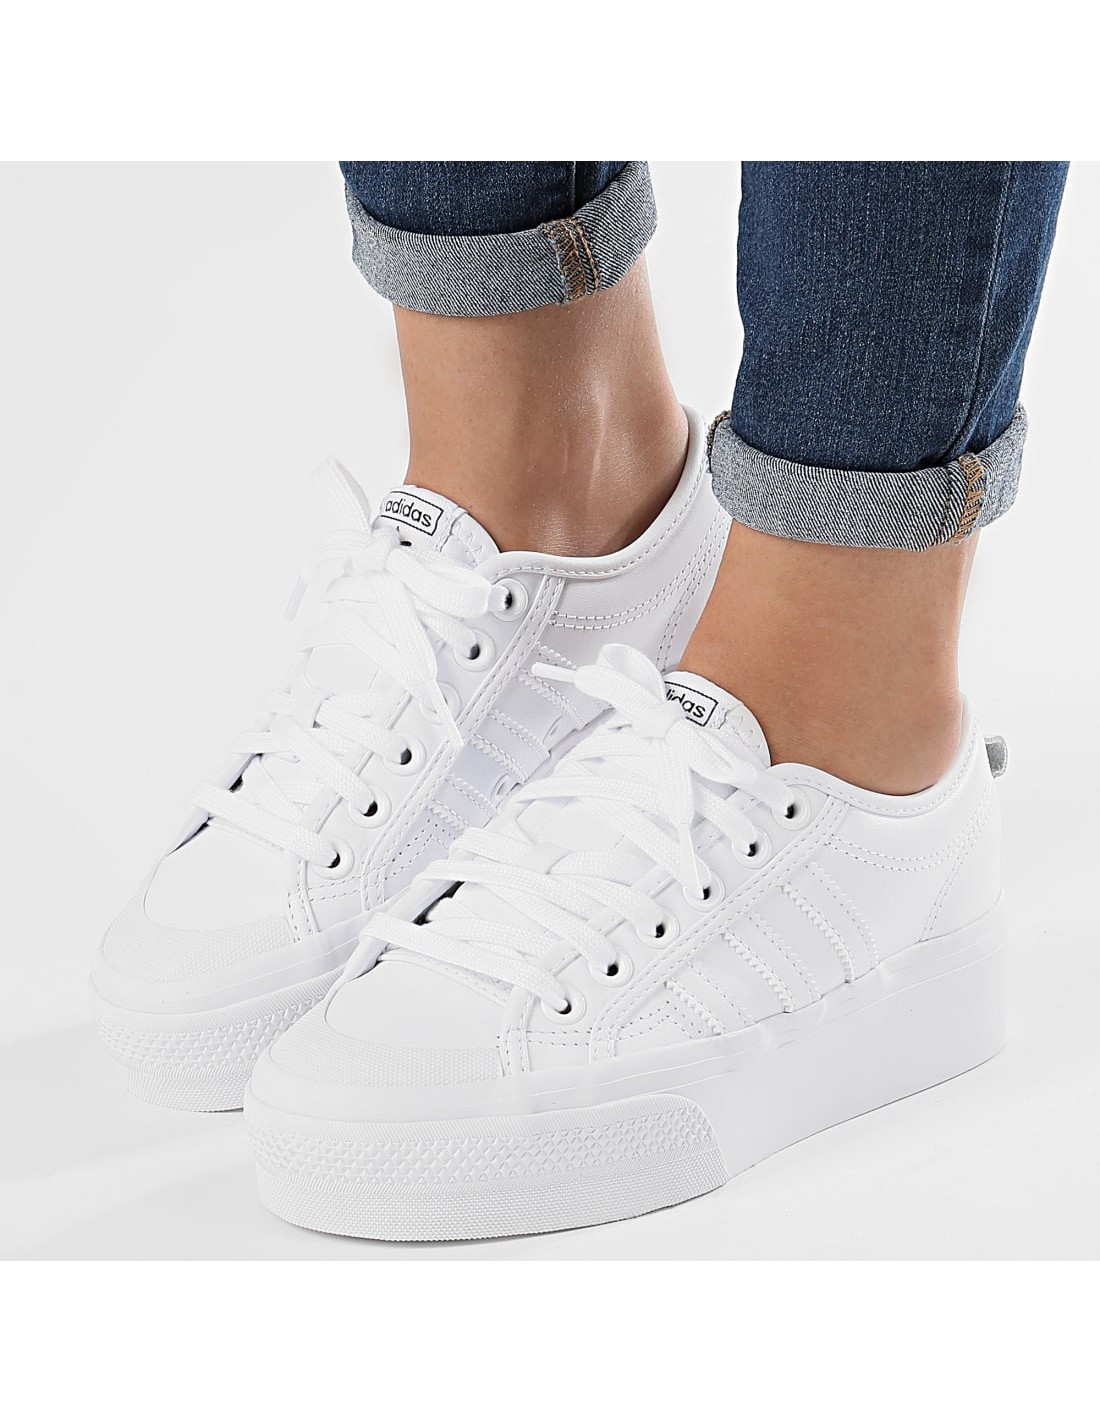 Adidas Originals Nizza Platform Women's Shoes White